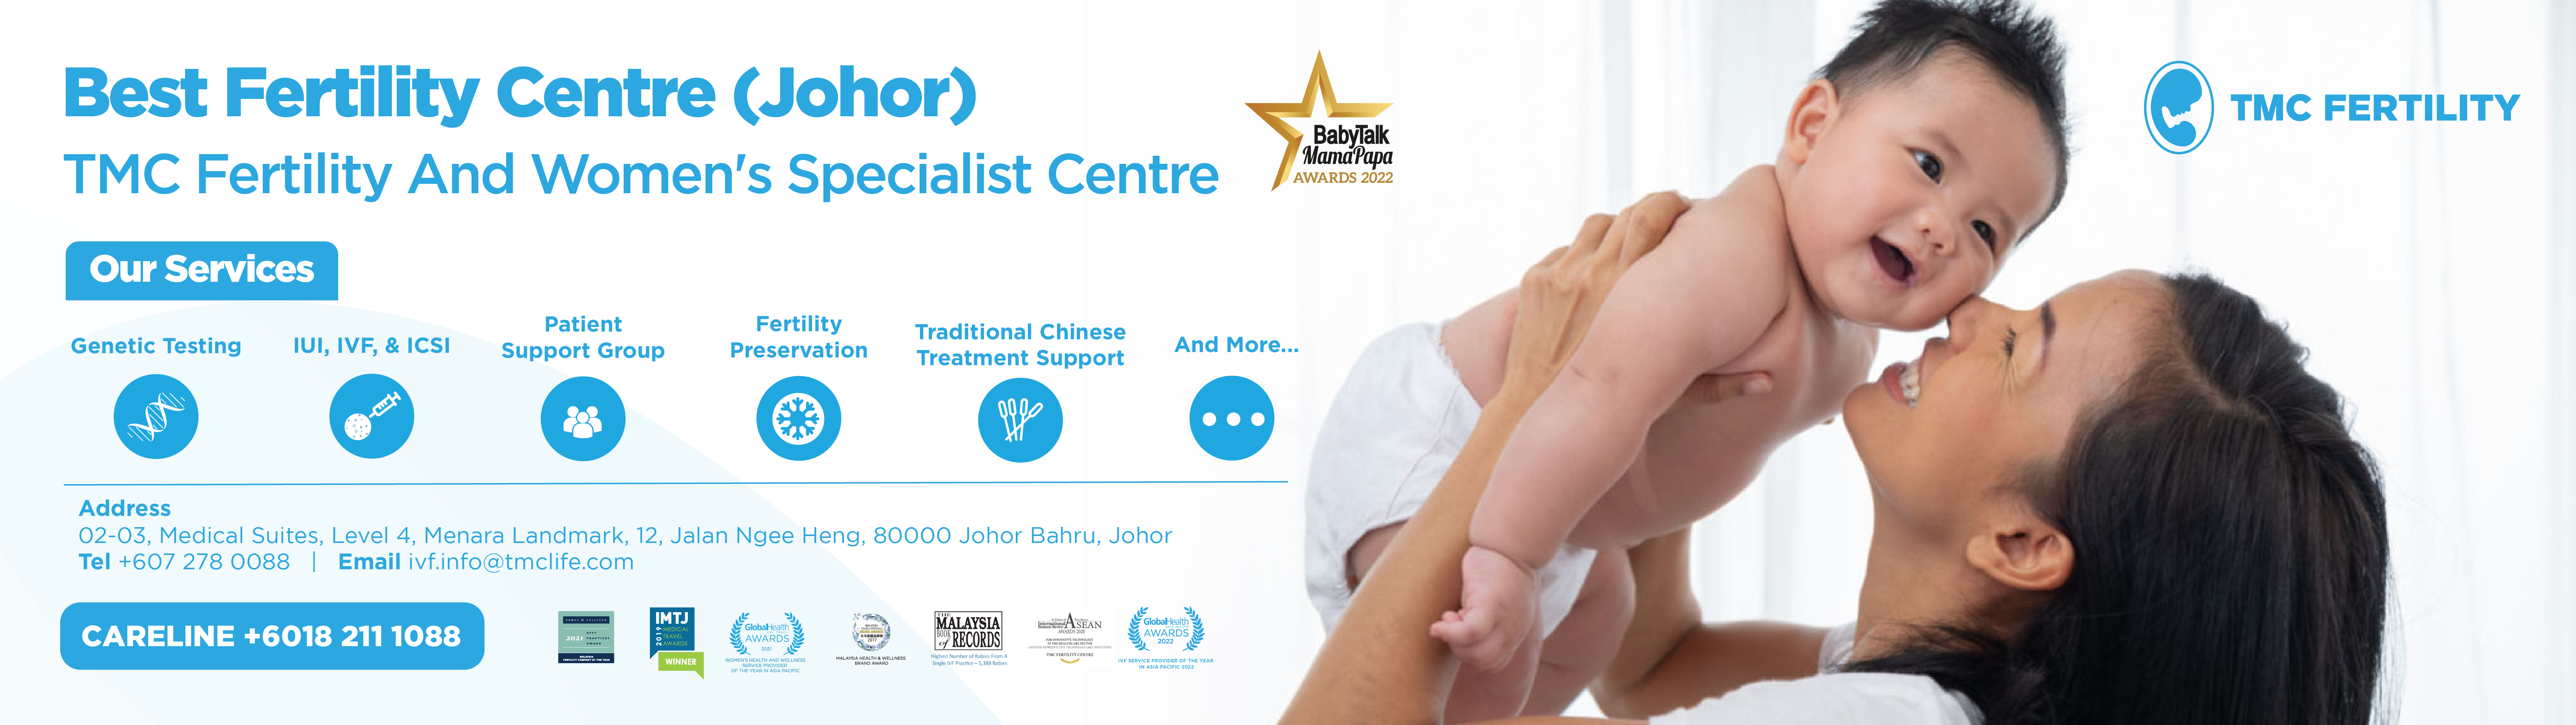 TMC Fertility & Women’s Specialist Centre – Johor Bahru